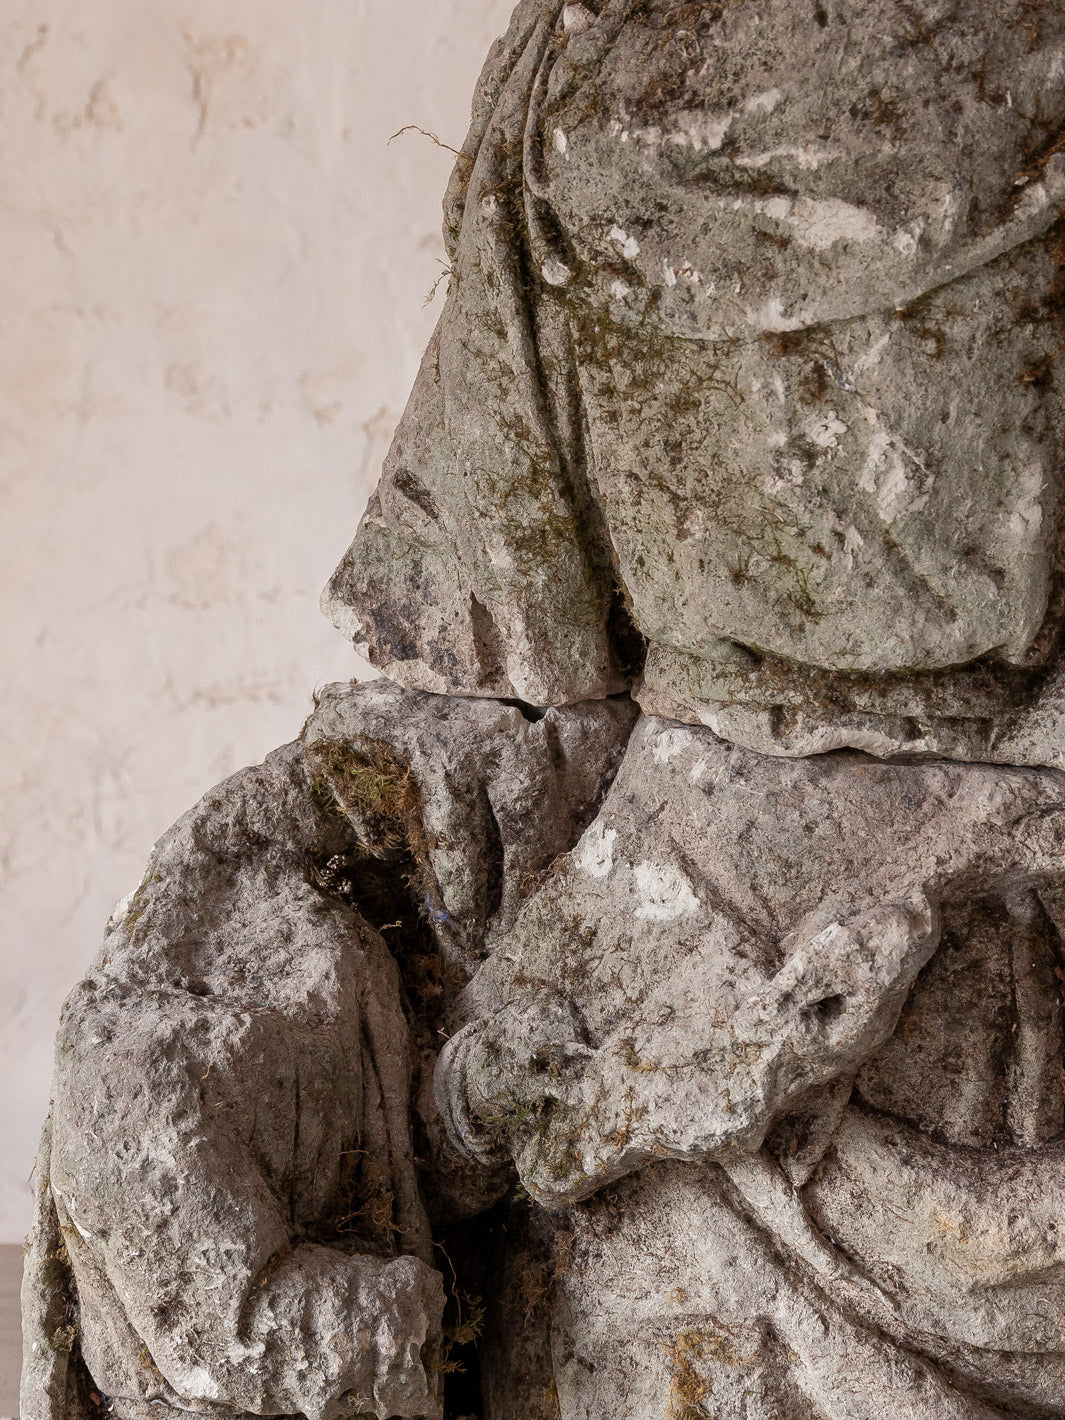 Stone bust Virgin Anjou XNUMXth century